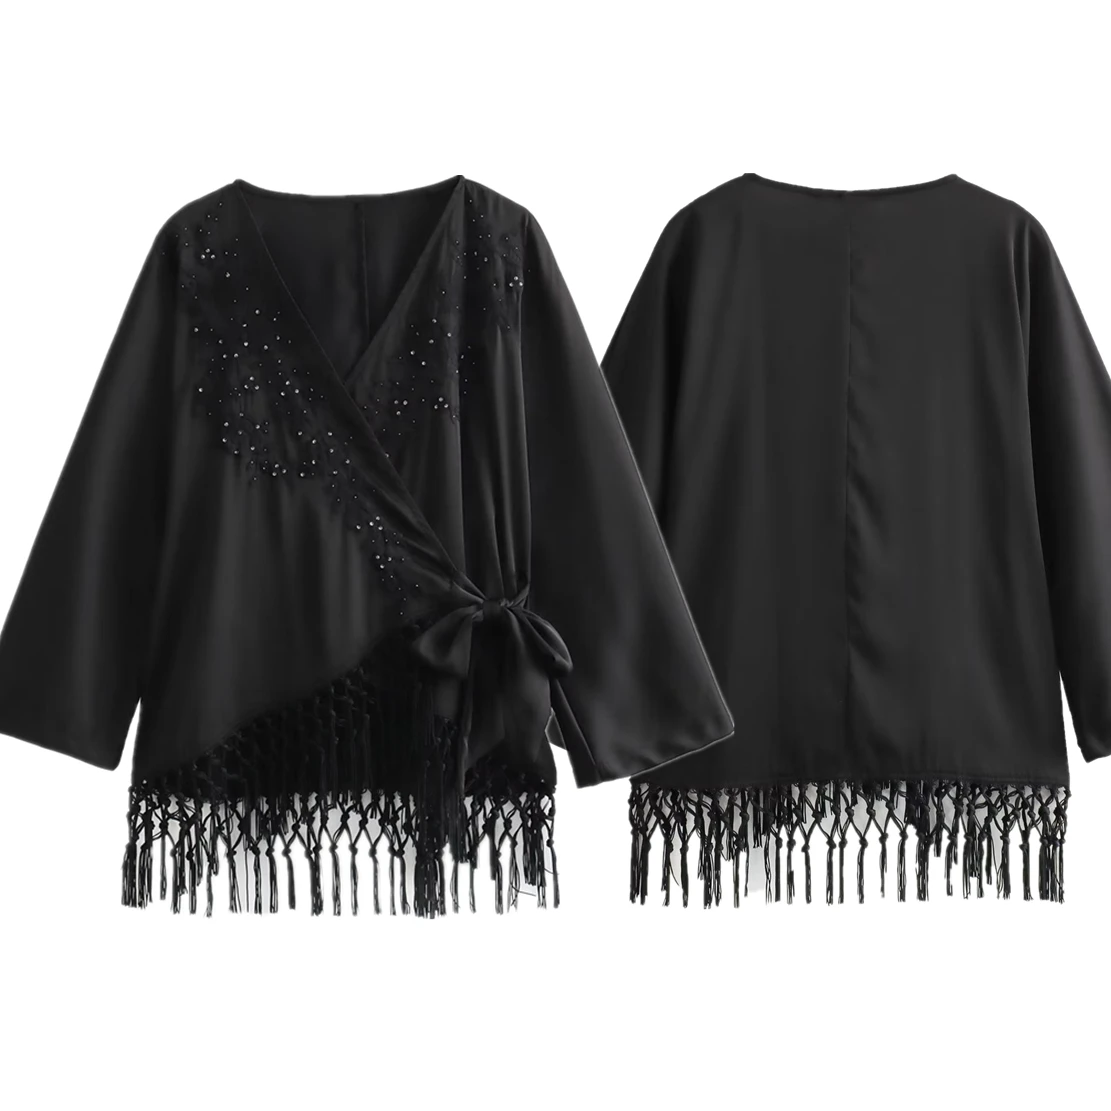 Jenny&Dave Embroidery Kimono Style Asymmetric Jacket Casual Top French Black Elegant Vintage Tassel Shirt